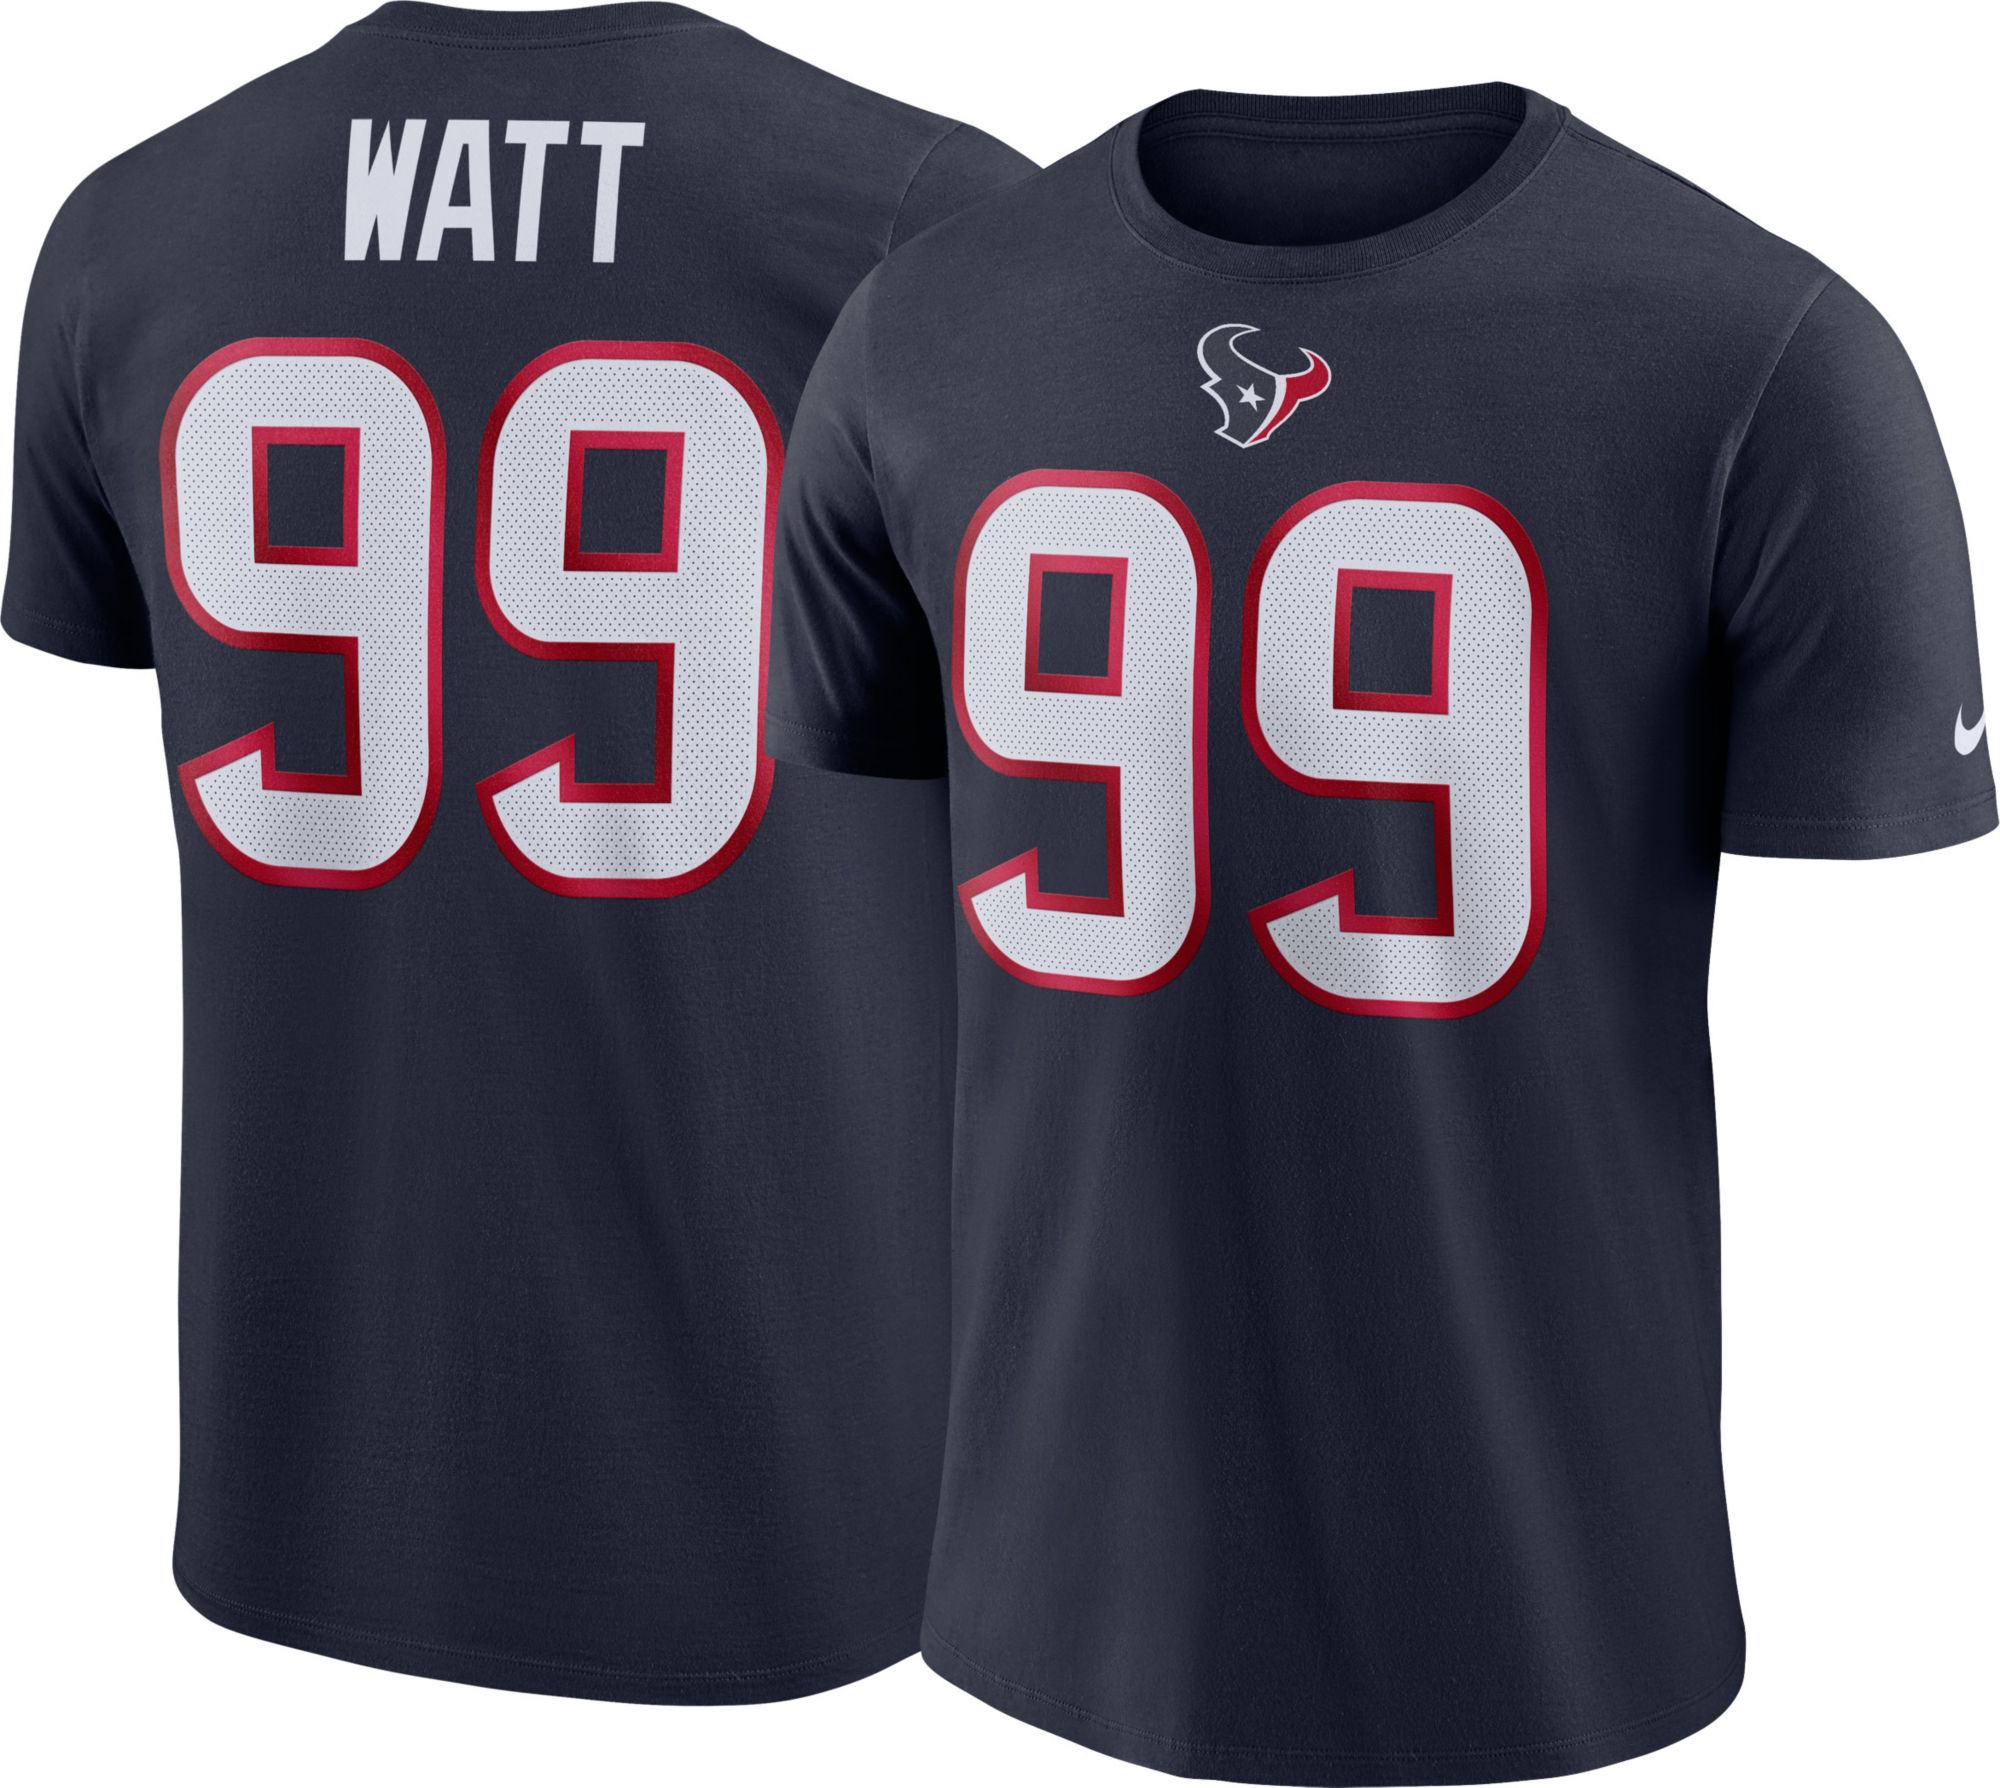 Nike Men's Houston Texans J.J. Watt #99 